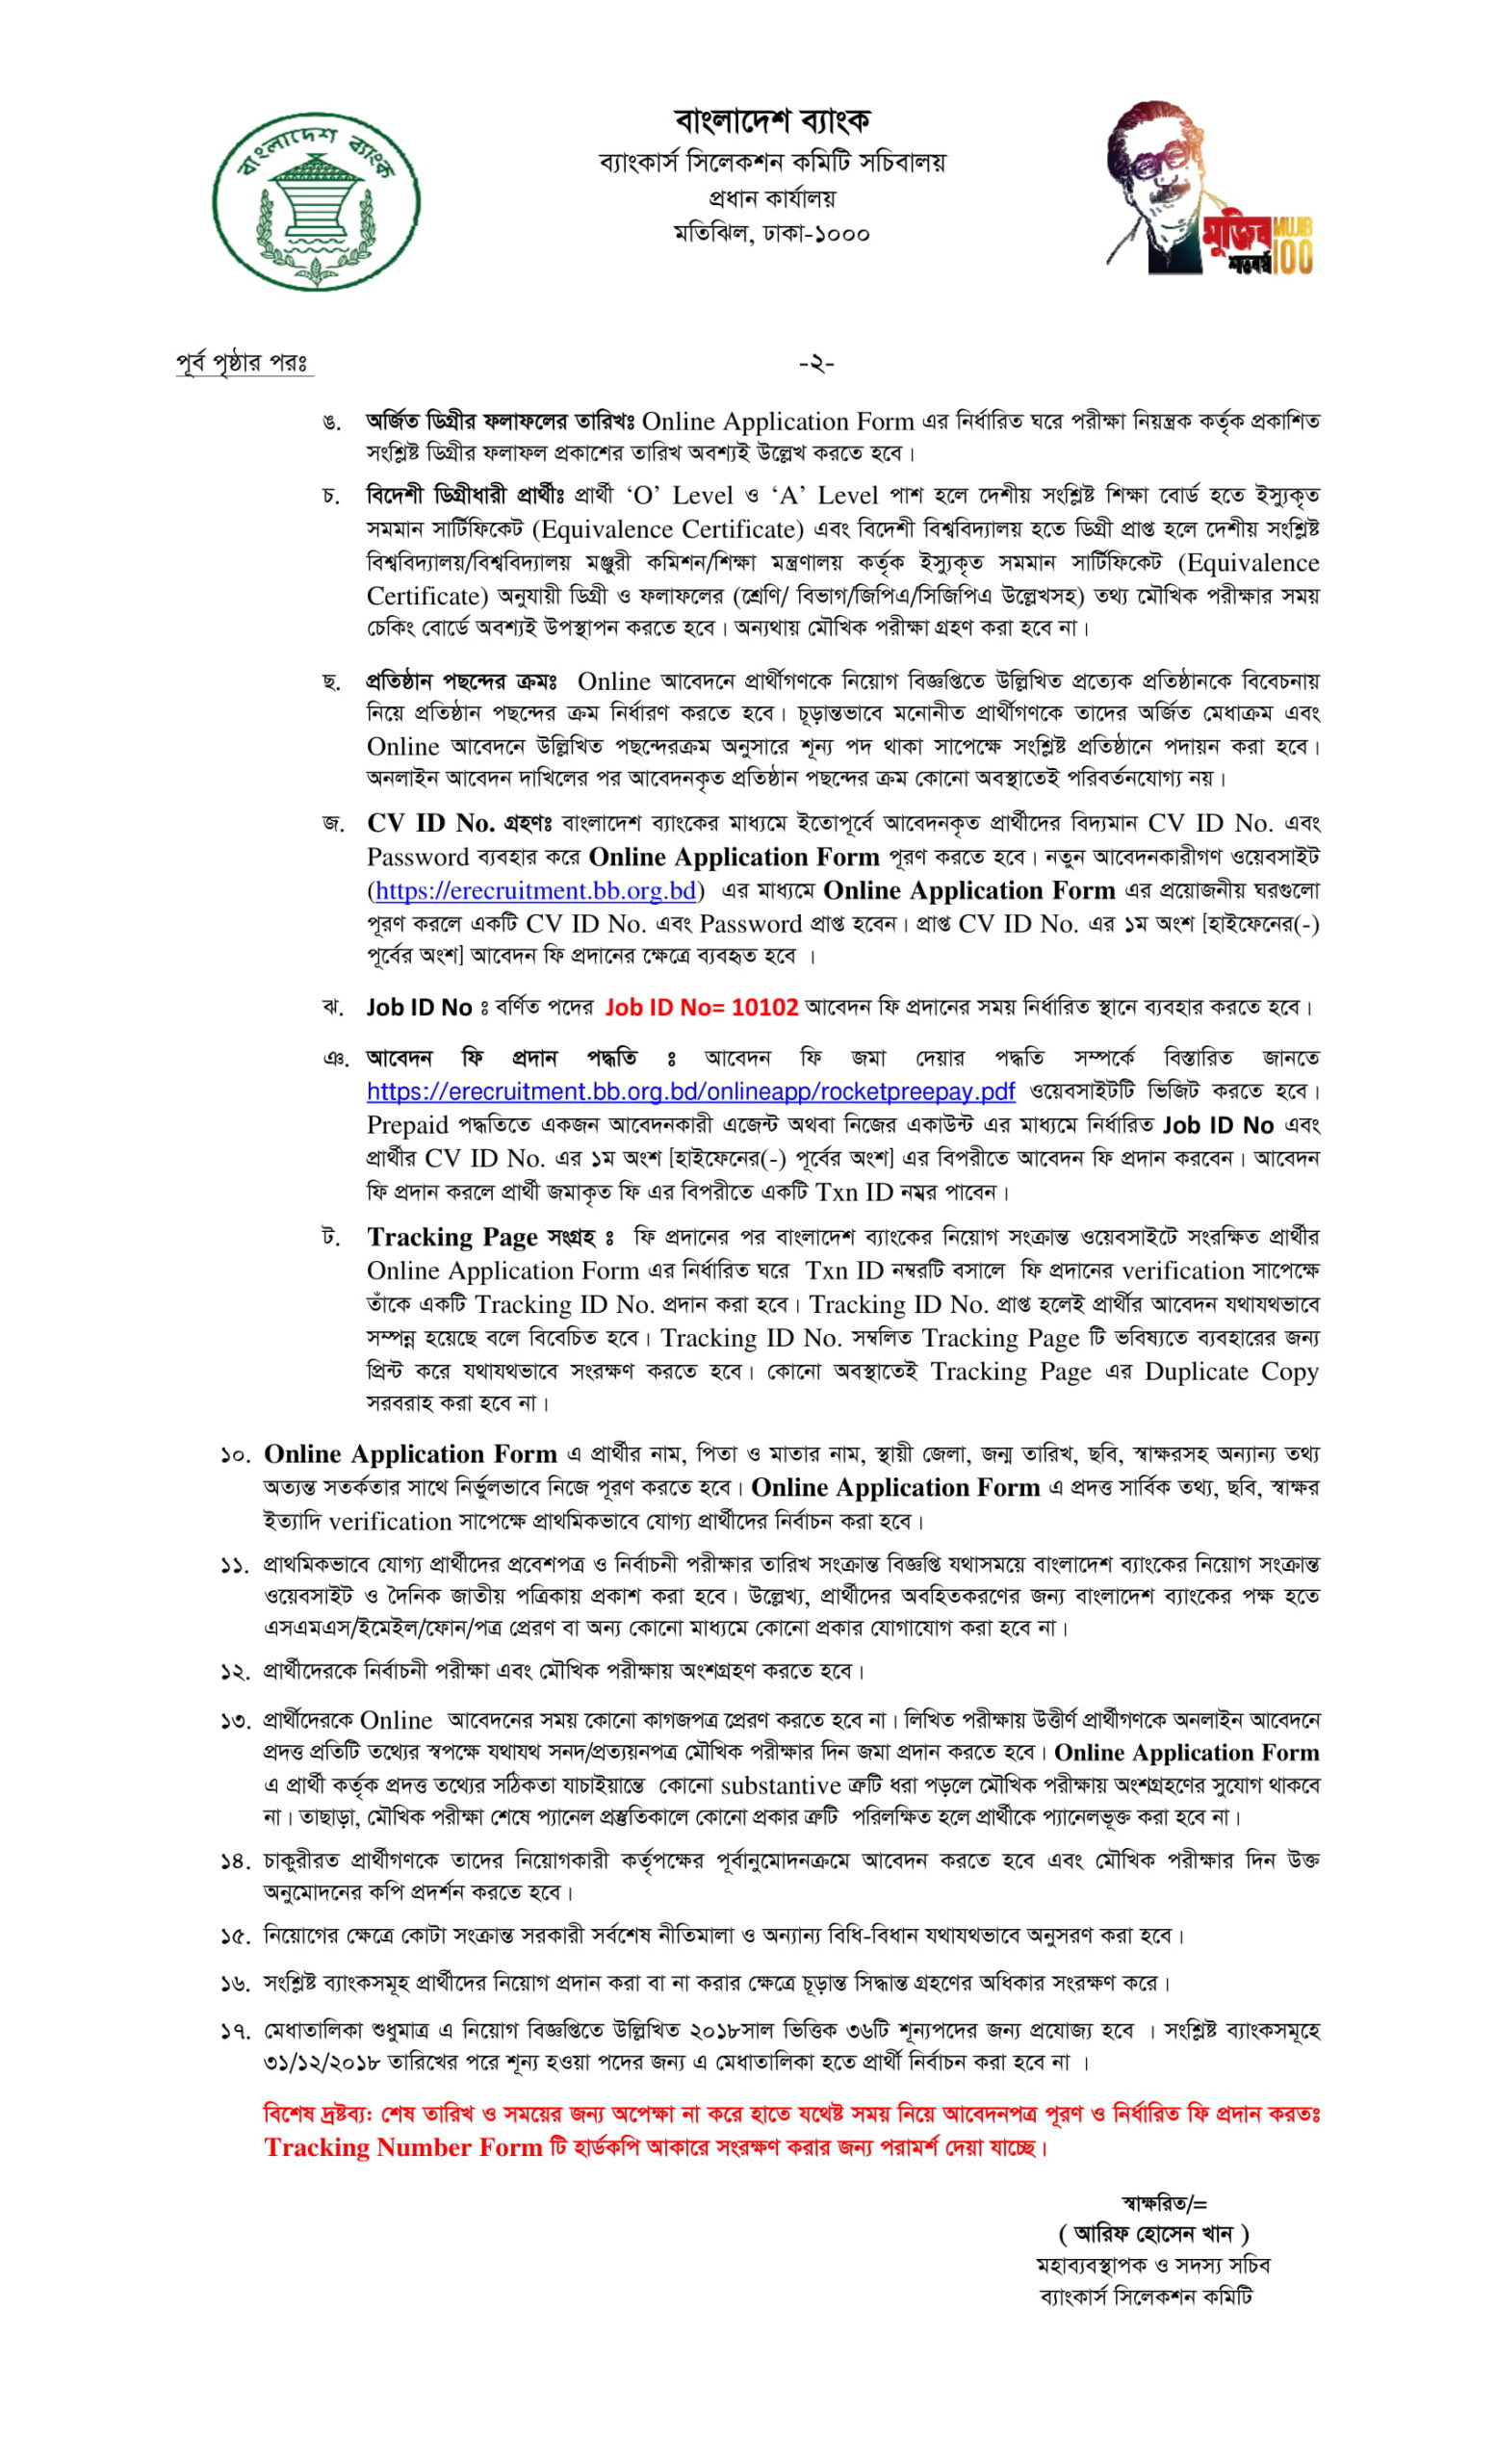 Sonali Bank Ltd Job circular 2020